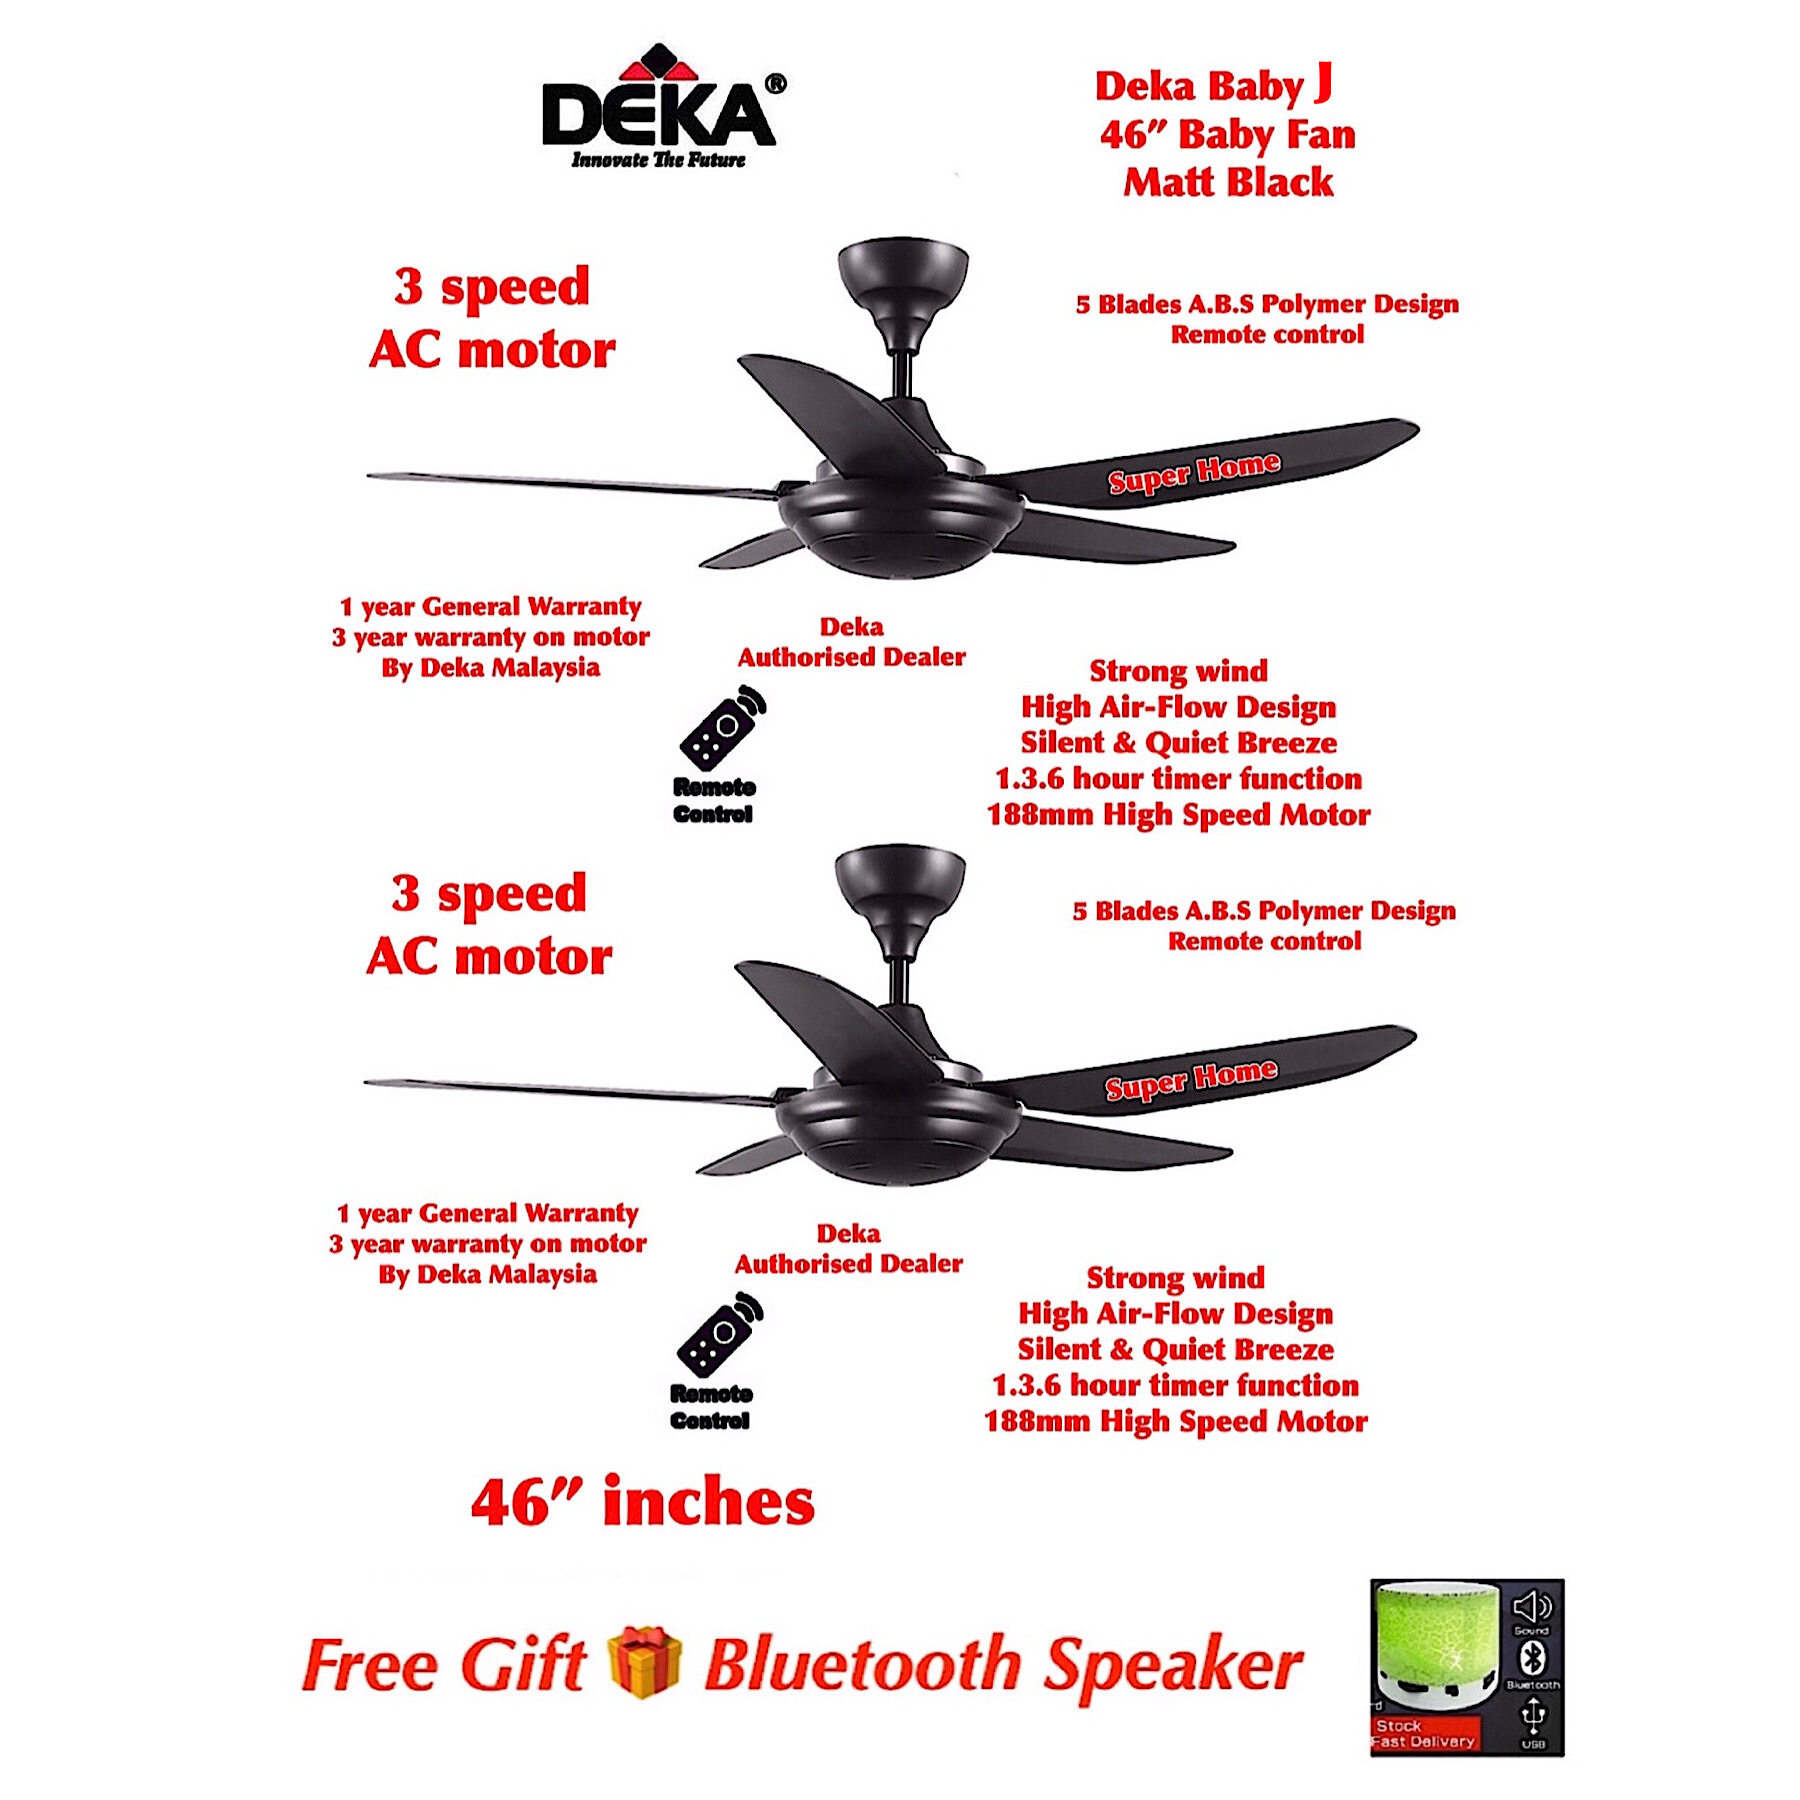 Deka Baby Fan Baby J Matt Black Remote Control 46 inches 5 Blades Baby Ceiling Fan [2 unit] + Free Gift Mini Bluetooth Speaker